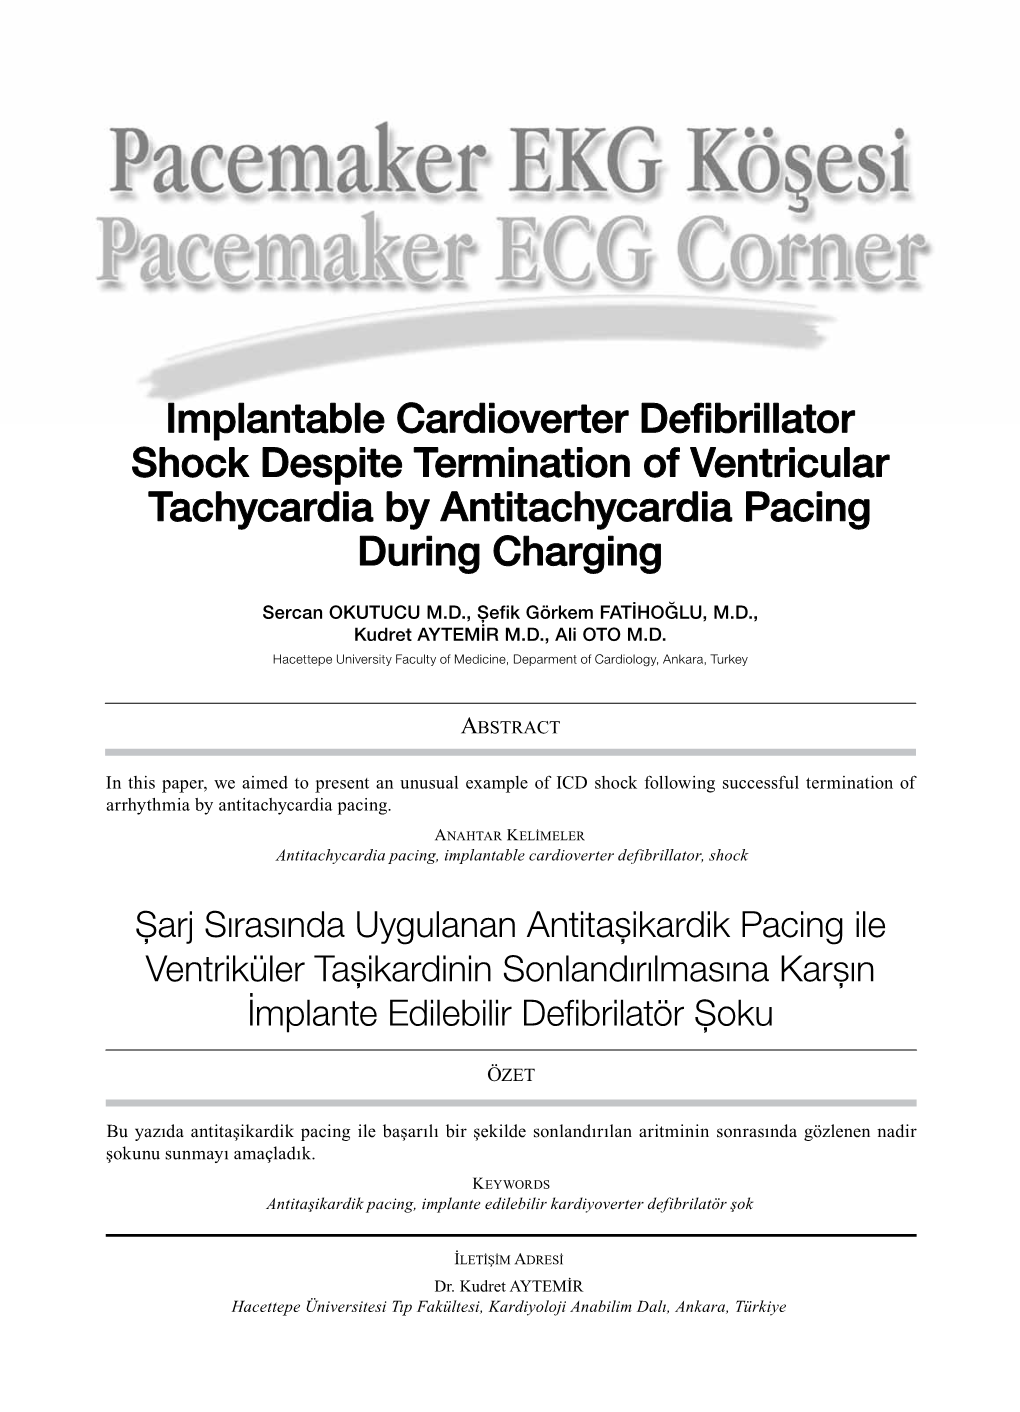 Implantable Cardioverter Defibrillator Shock Despite Termination of Ventricular Tachycardia by Antitachycardia Pacing During Charging